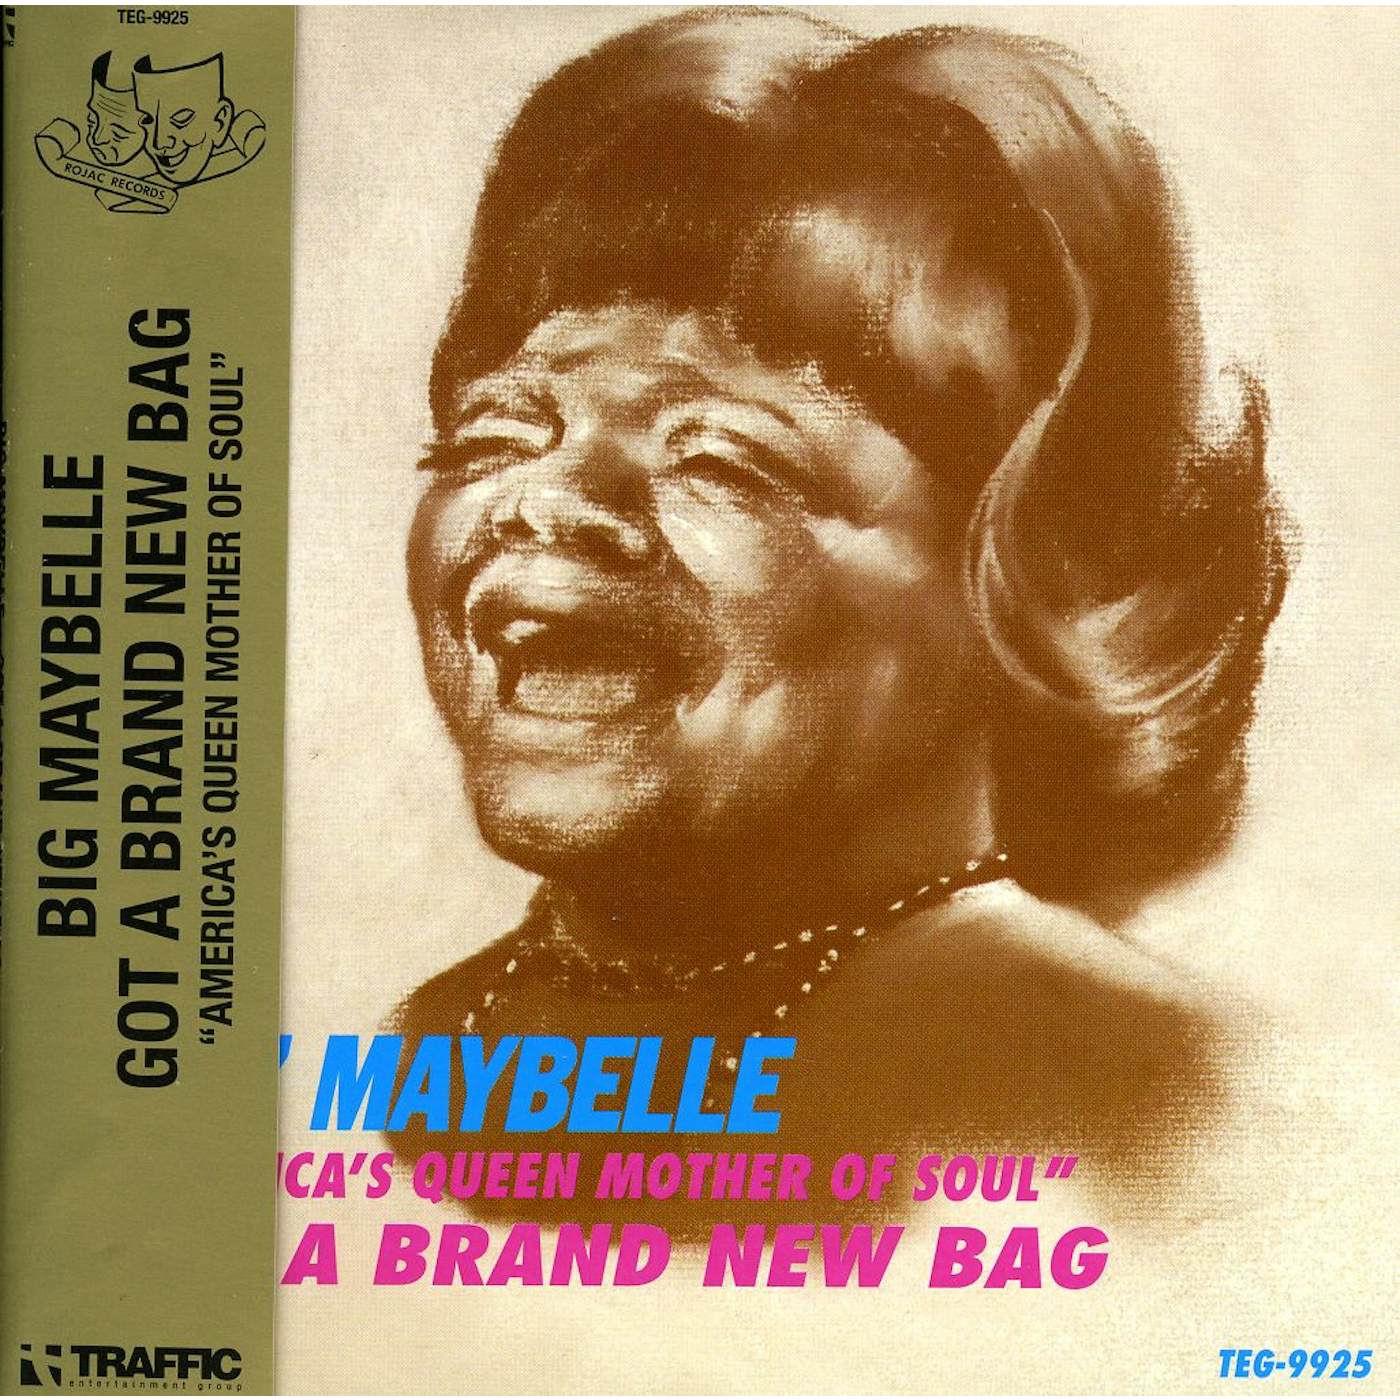 Big Maybelle GOT A BRAND NEW BAG CD